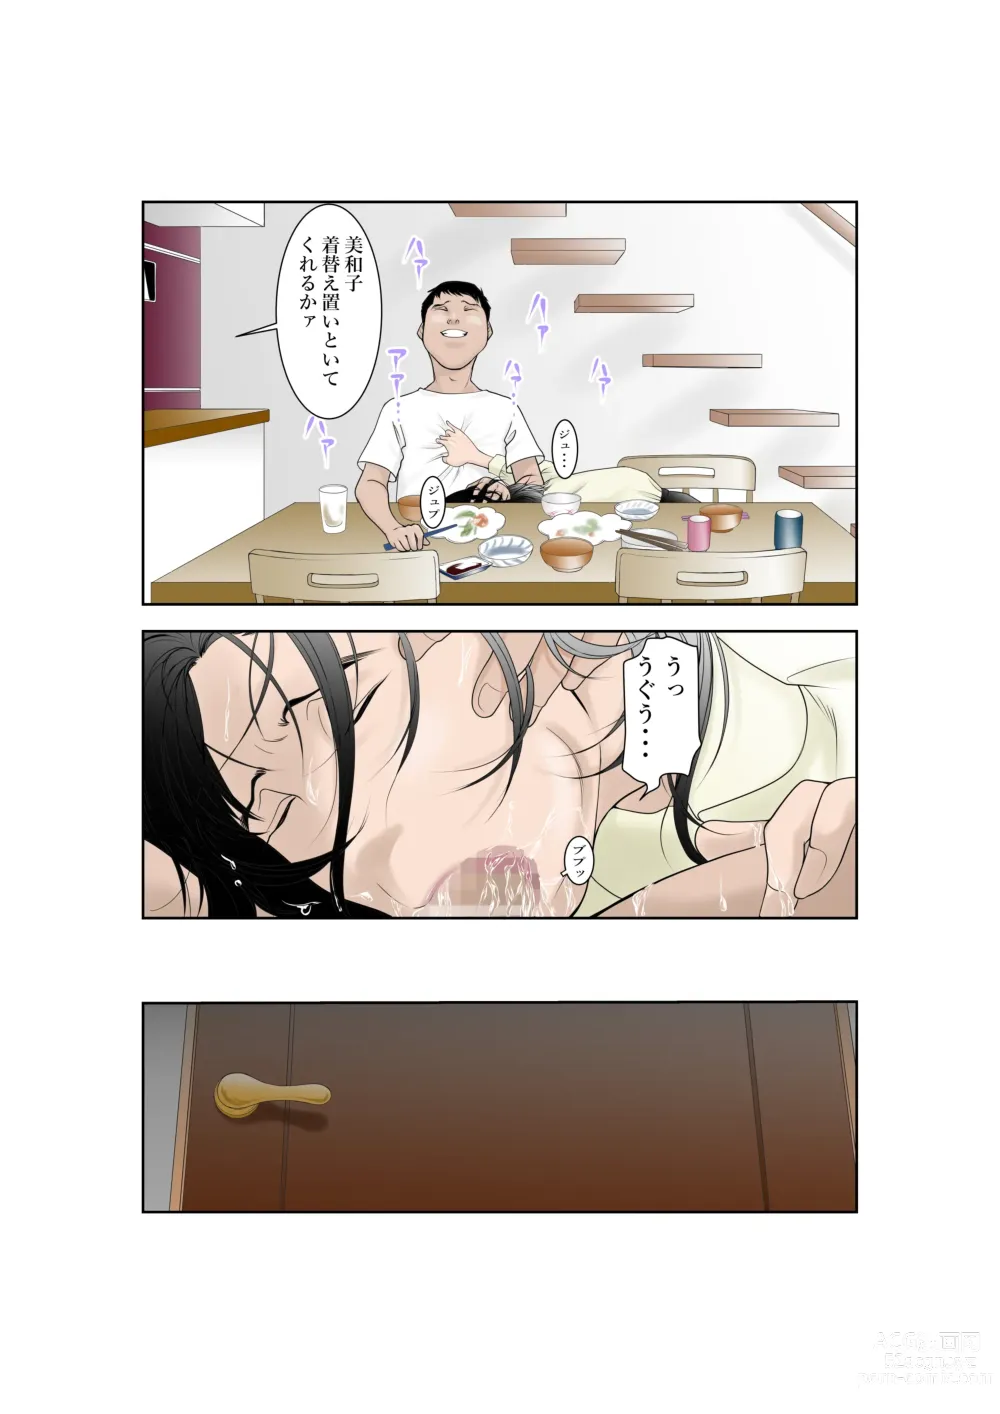 Page 33 of doujinshi Shiawase Kazoku no Sodate kata